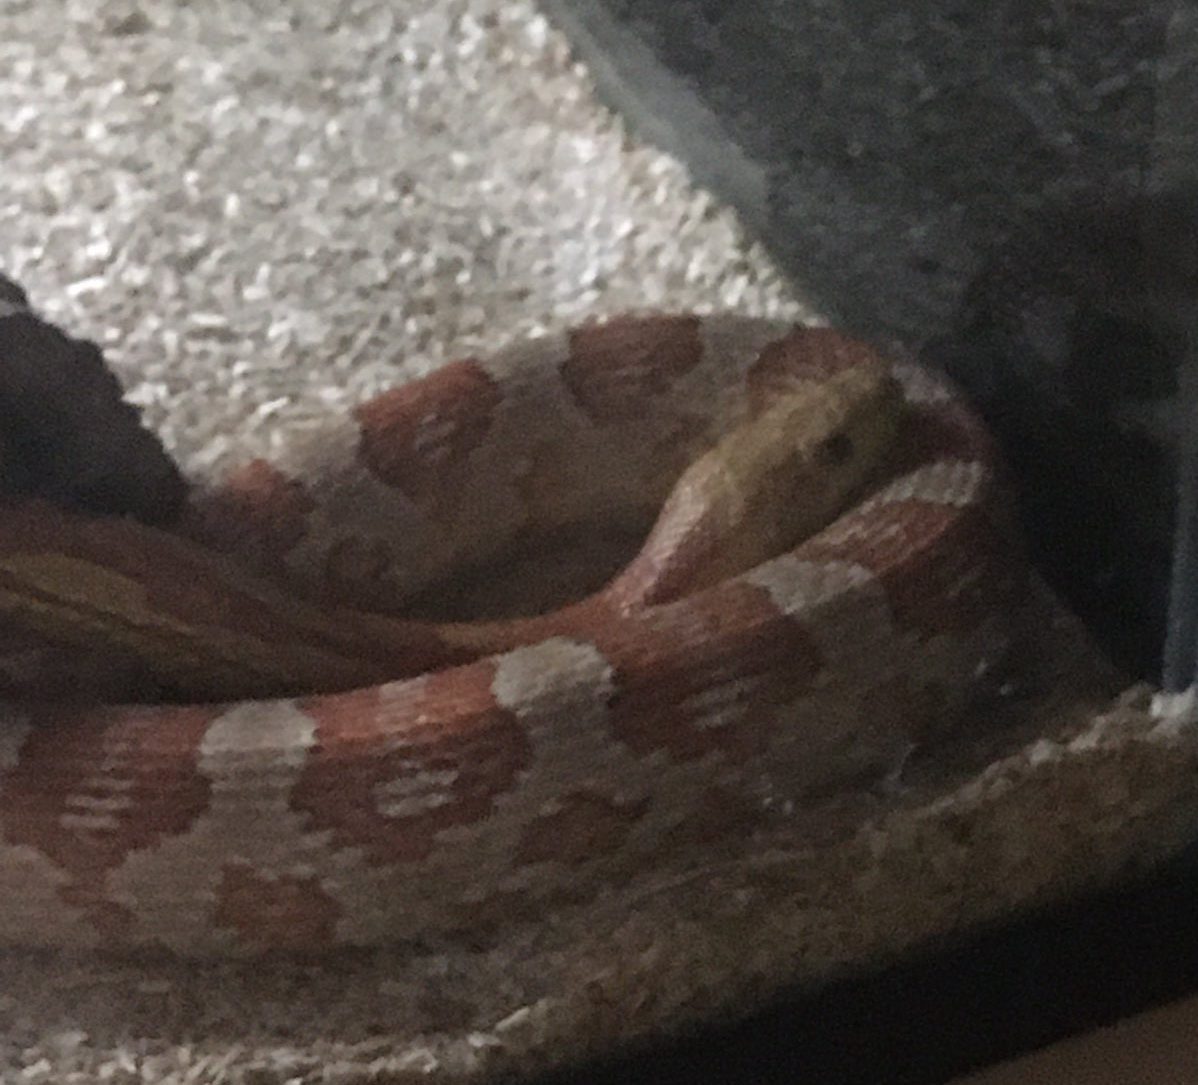 A photograph of my pet snake, Kabocha, a bright orange corn snake